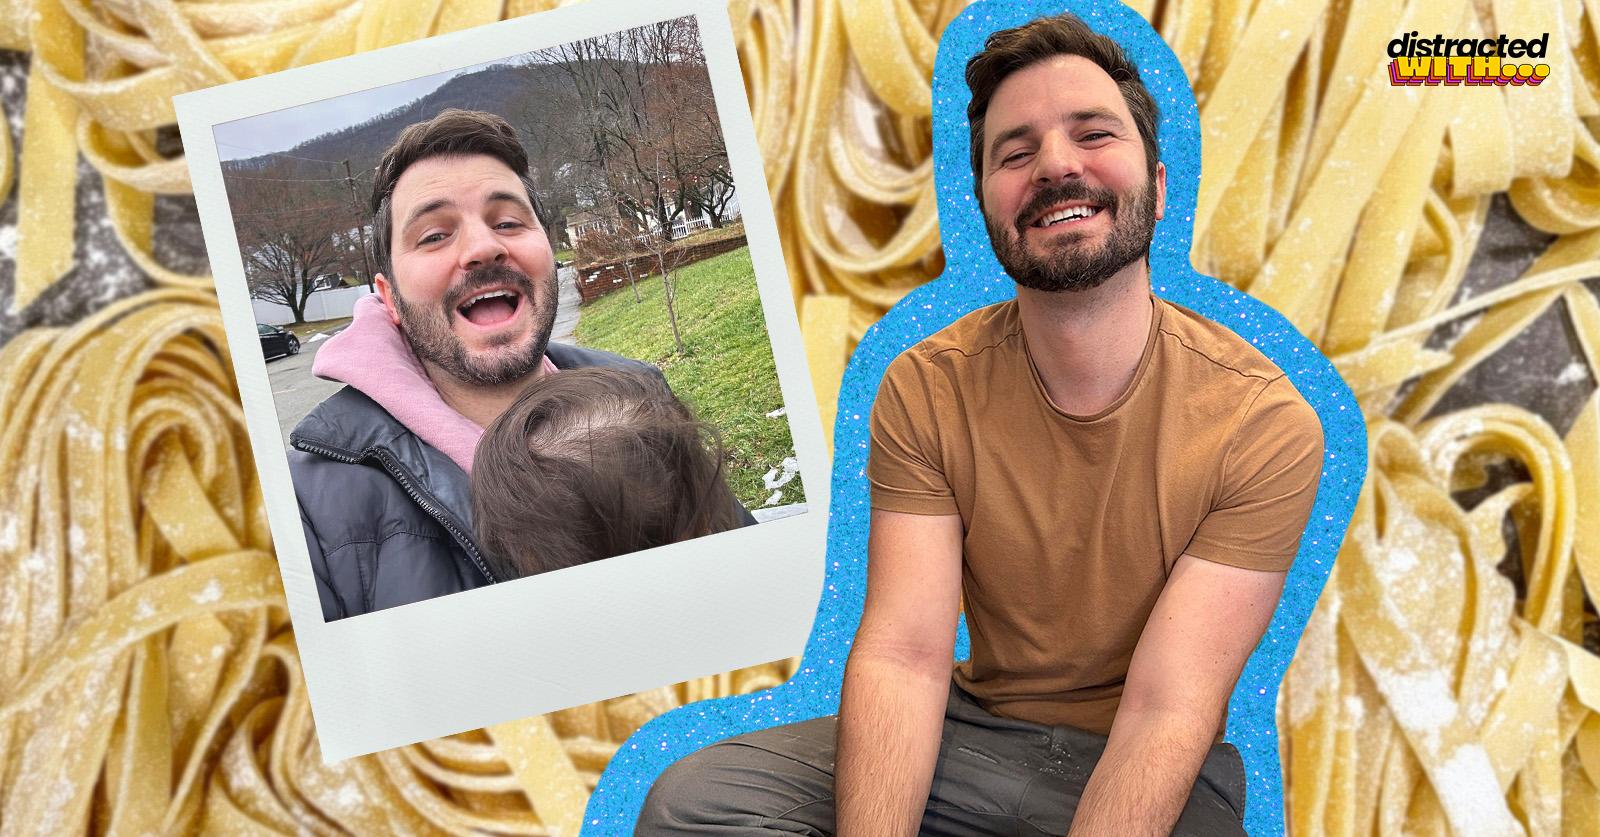 Danny loves pasta dw